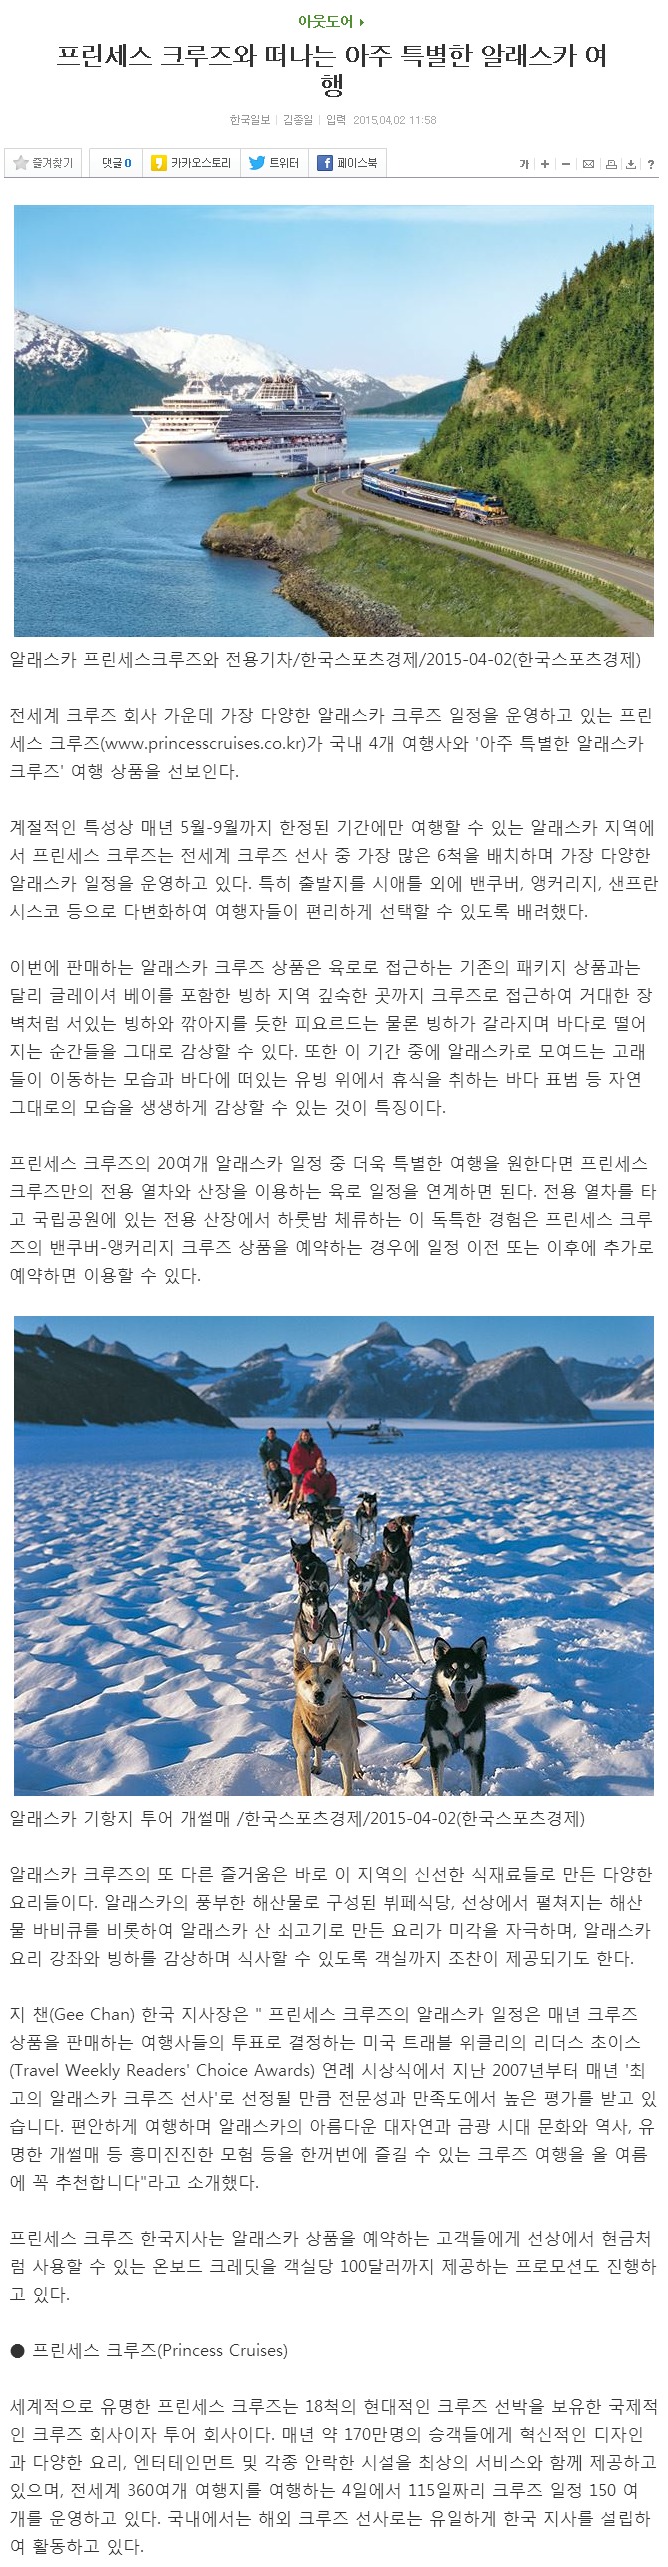 20150402_MediaDaum_프린세스 크루즈와 떠나는 아주 특별한 알래스카 여행  Daum라이프.jpeg